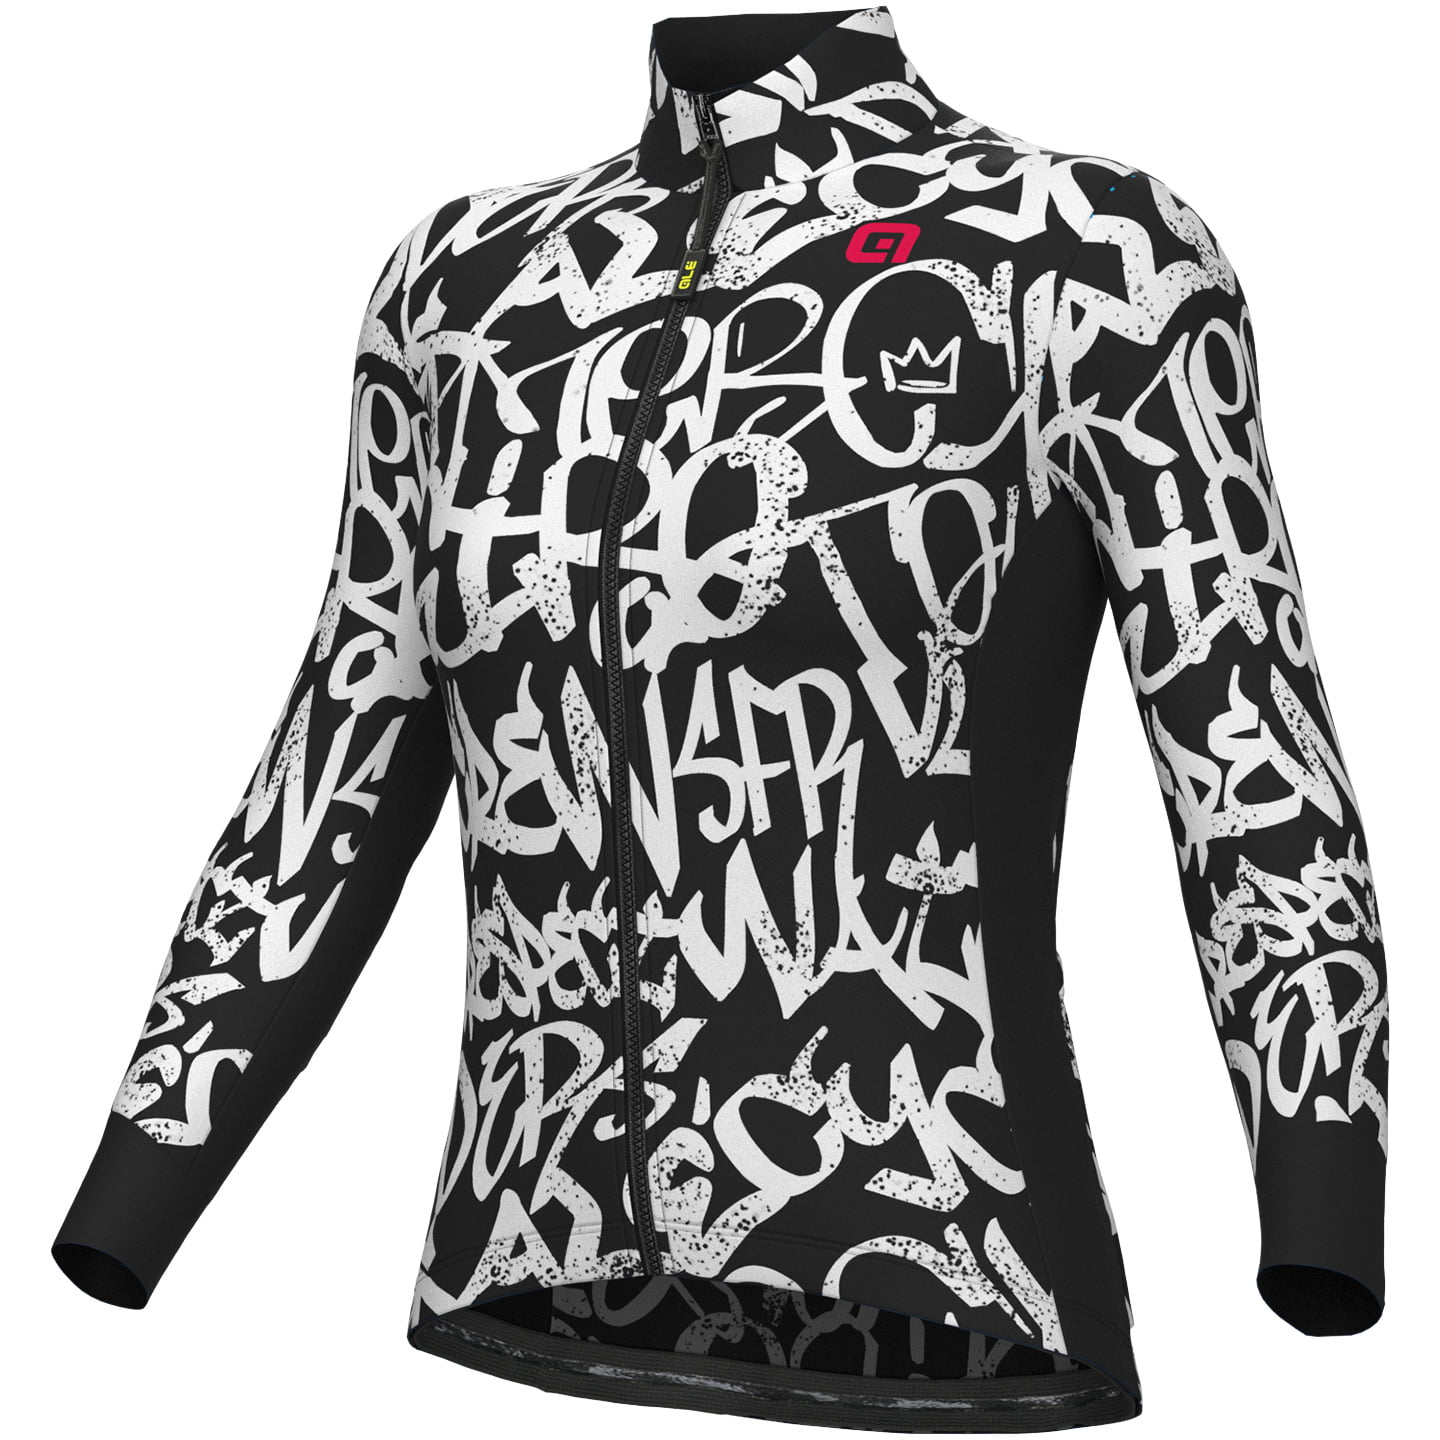 ALE Ride Women’s Jersey Jacket Jersey / Jacket, size S, Cycling jersey, Cycle gear